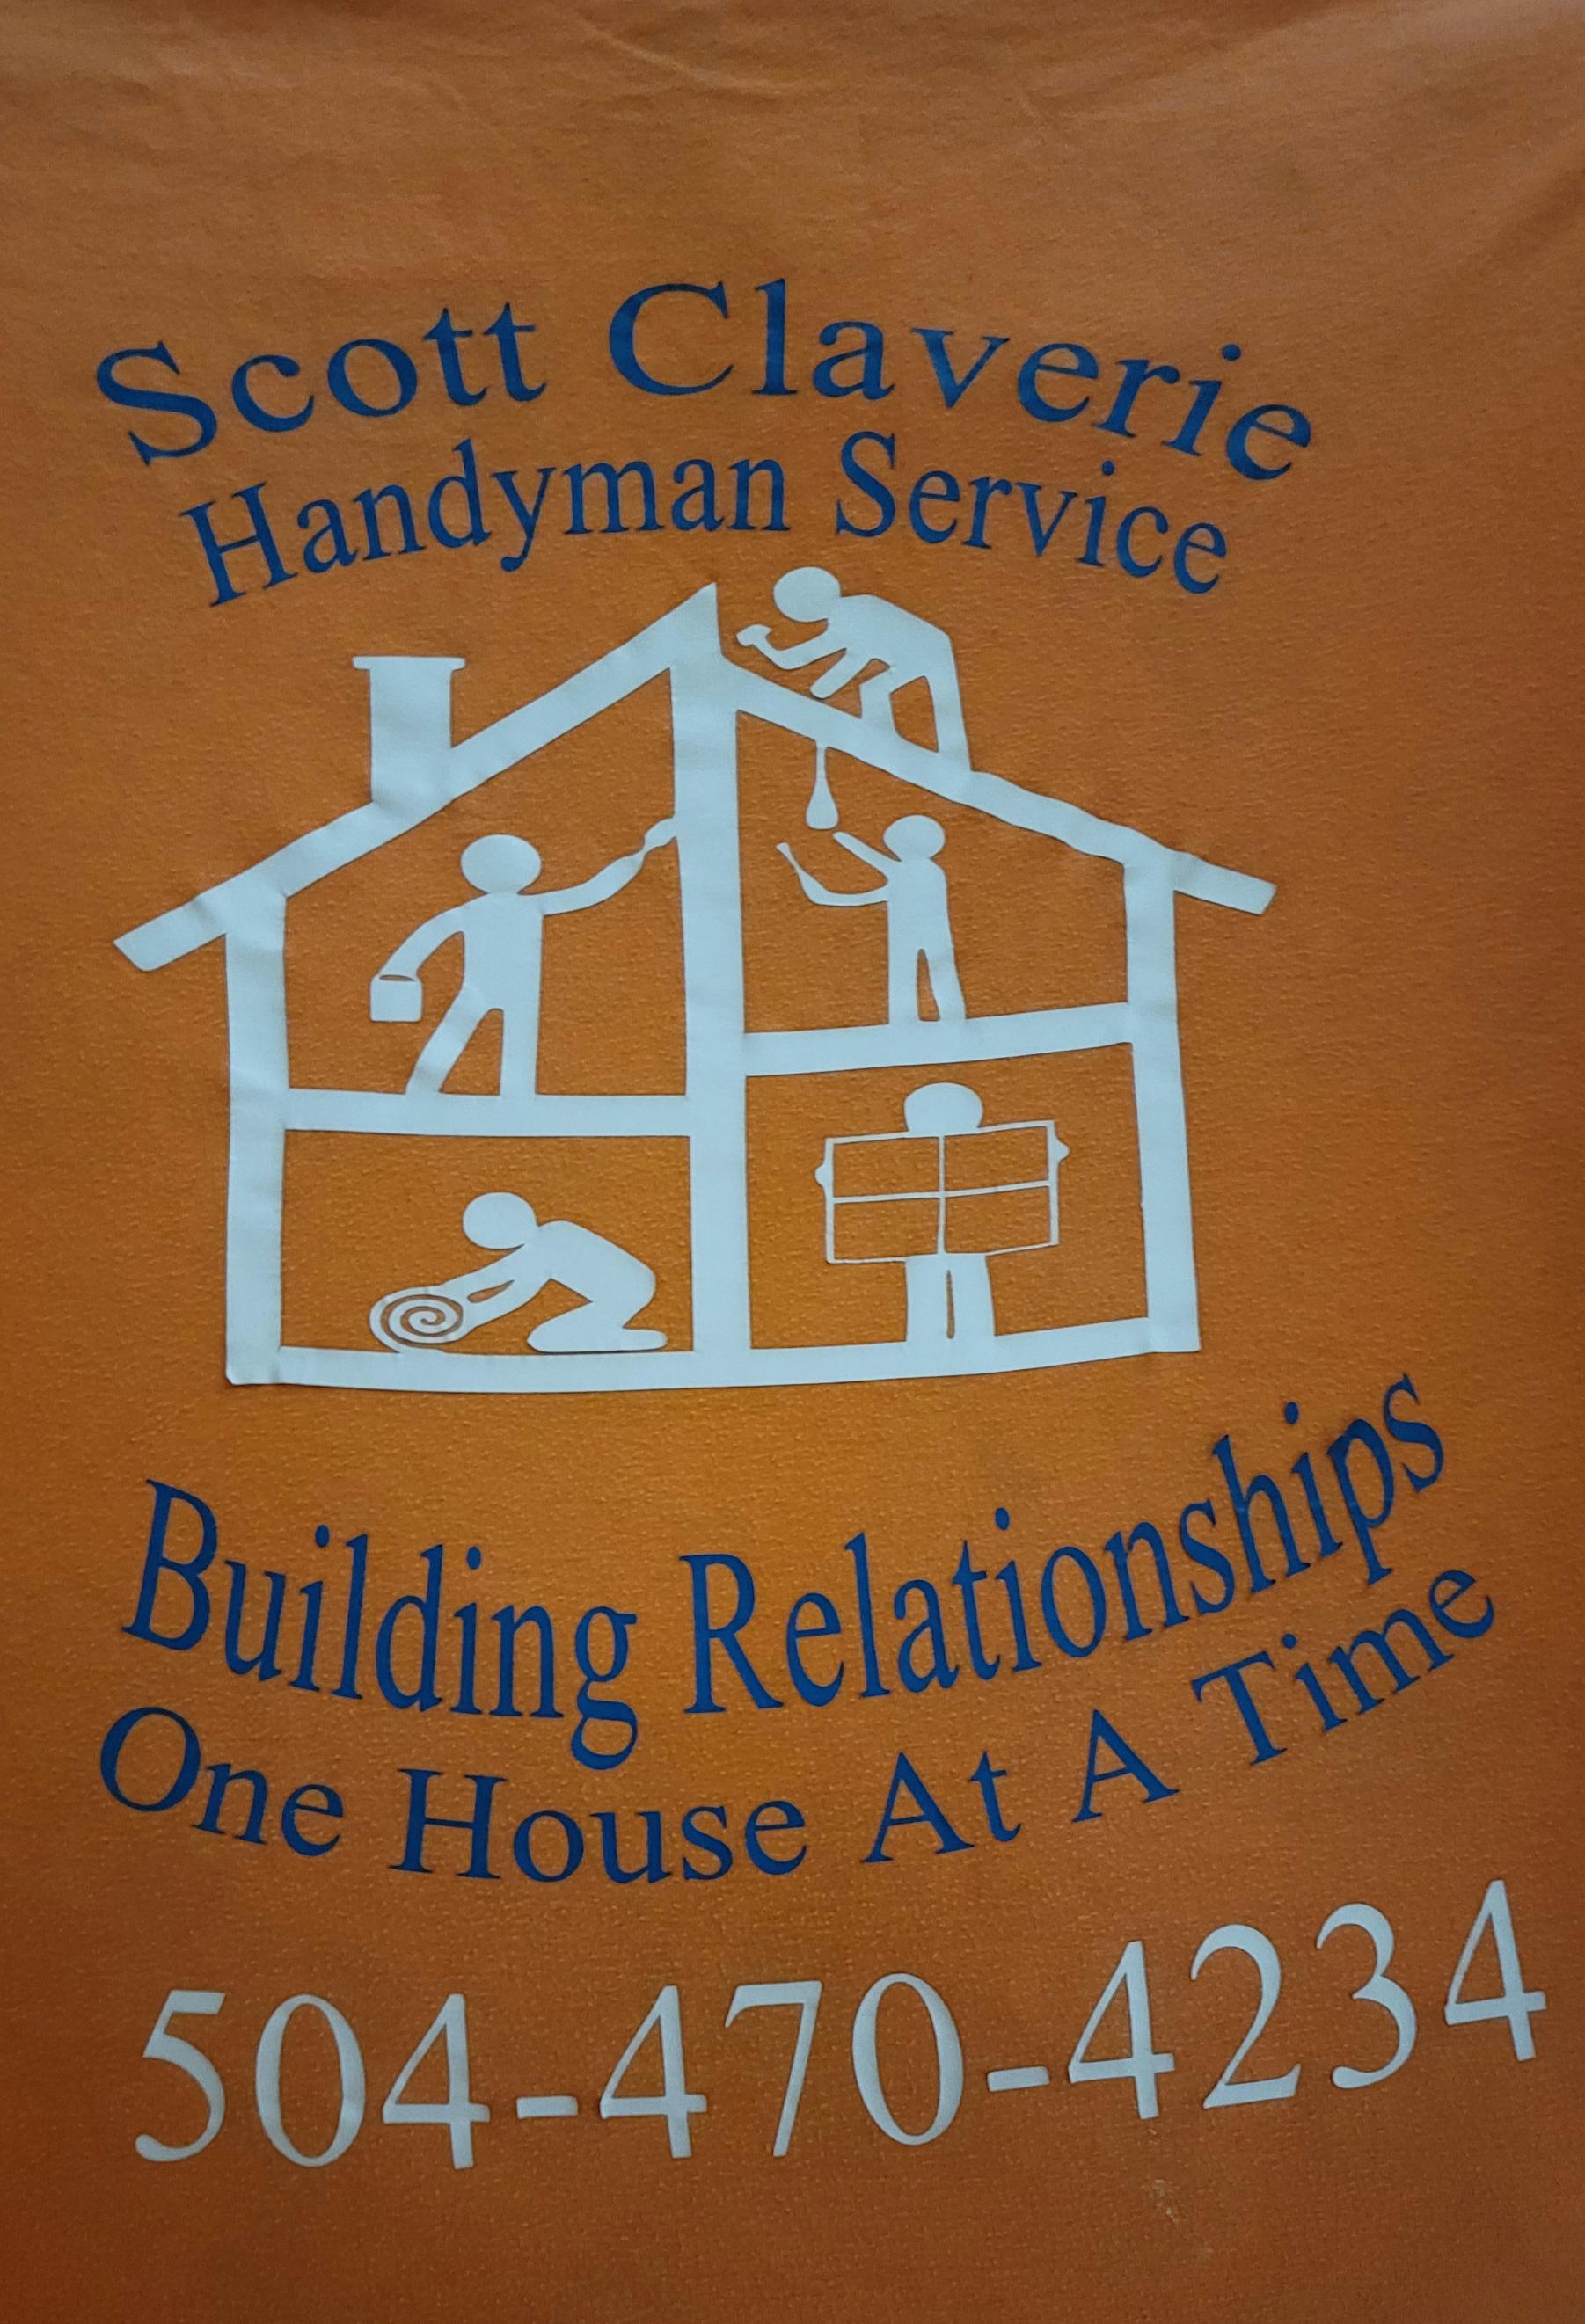 Scott Claverie Handyman Service Logo